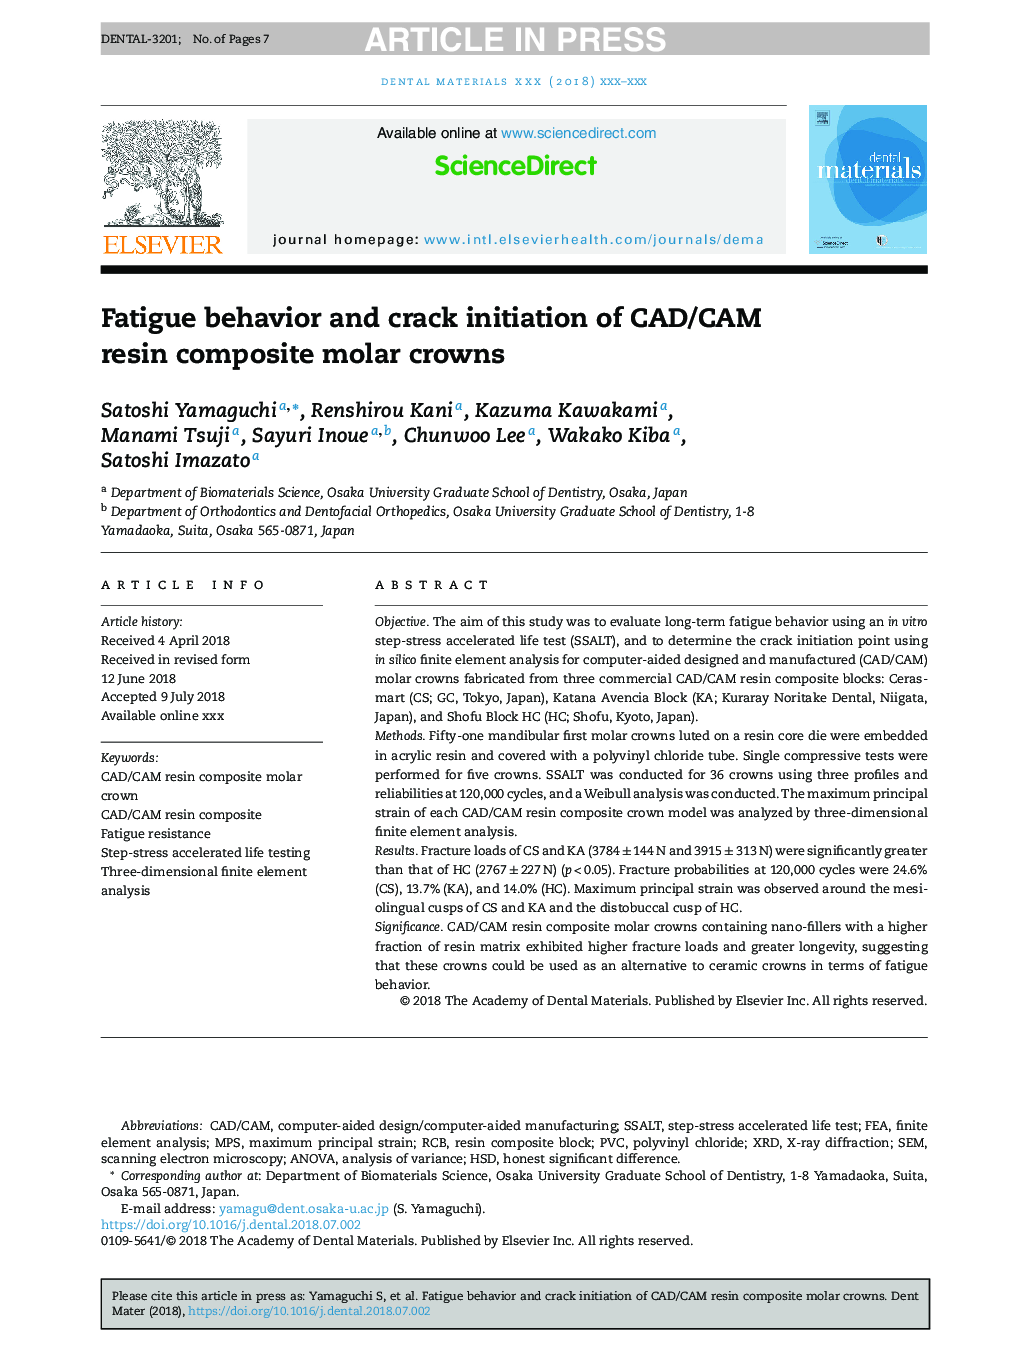 Fatigue behavior and crack initiation of CAD/CAM resin composite molar crowns